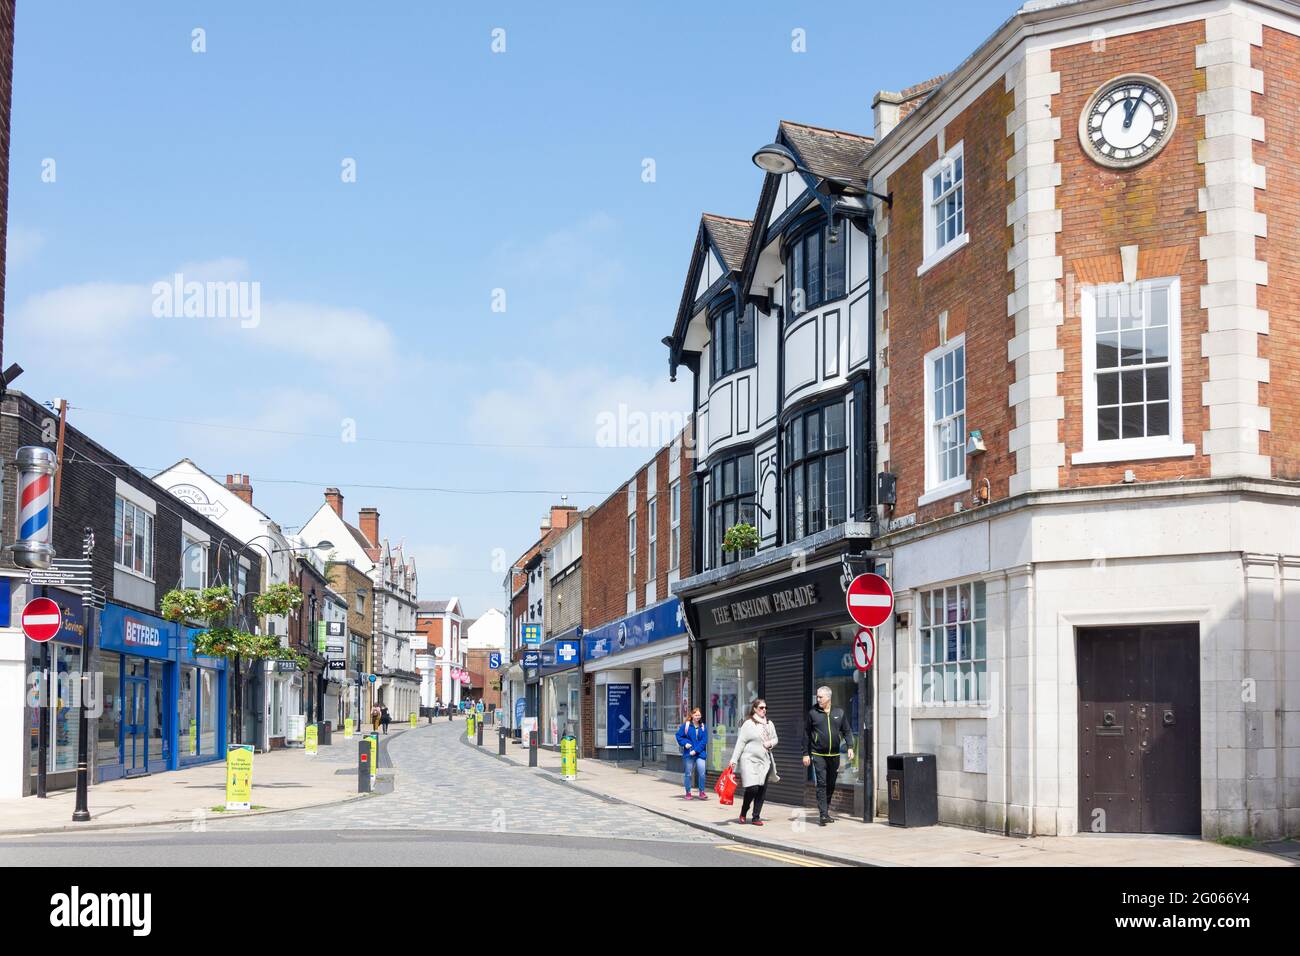 Pedestrianised High Street, Uttoxeter, Staffordshire, England, United Kingdom Stock Photo